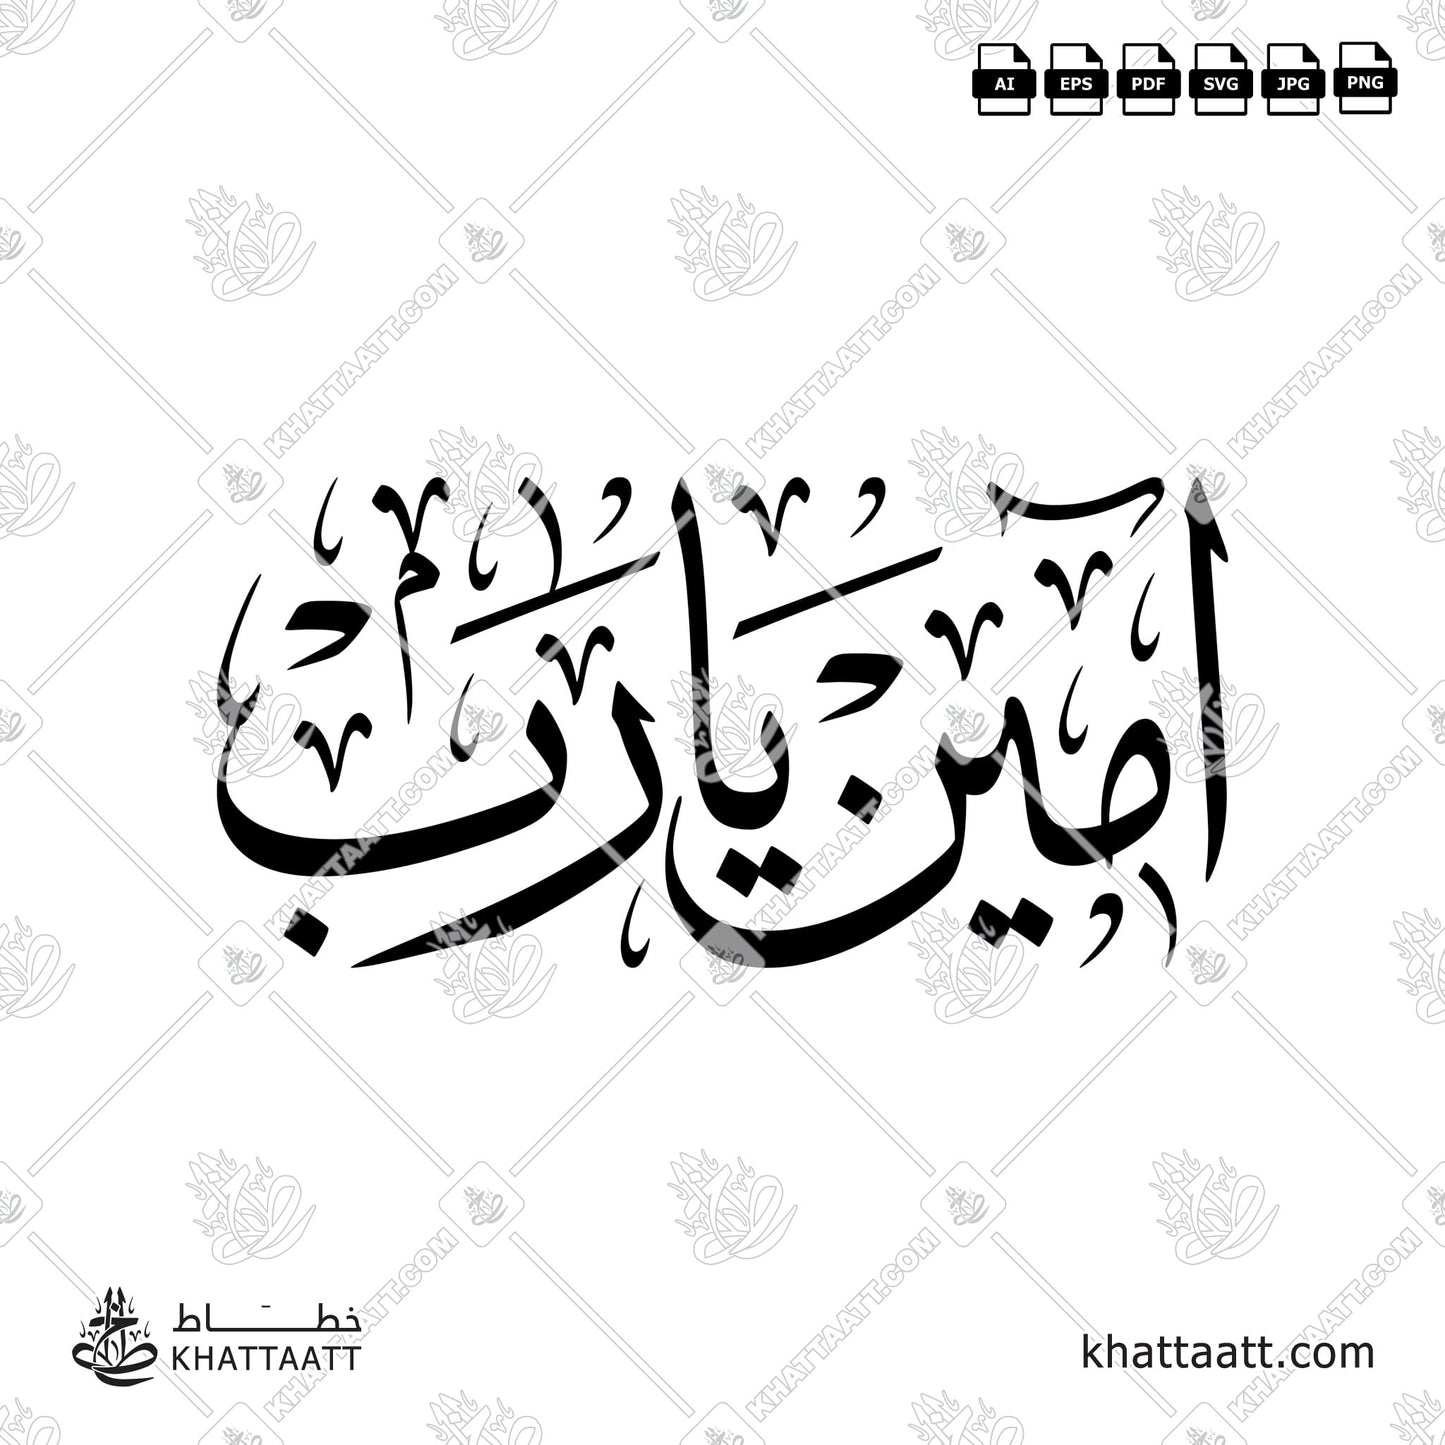 Download Arabic calligraphy تحميل مخطوطة خط عربي of Aameen Ya Rab - آمين يا رب (T011) Thuluth - خط الثلث in vector فيكتور and png